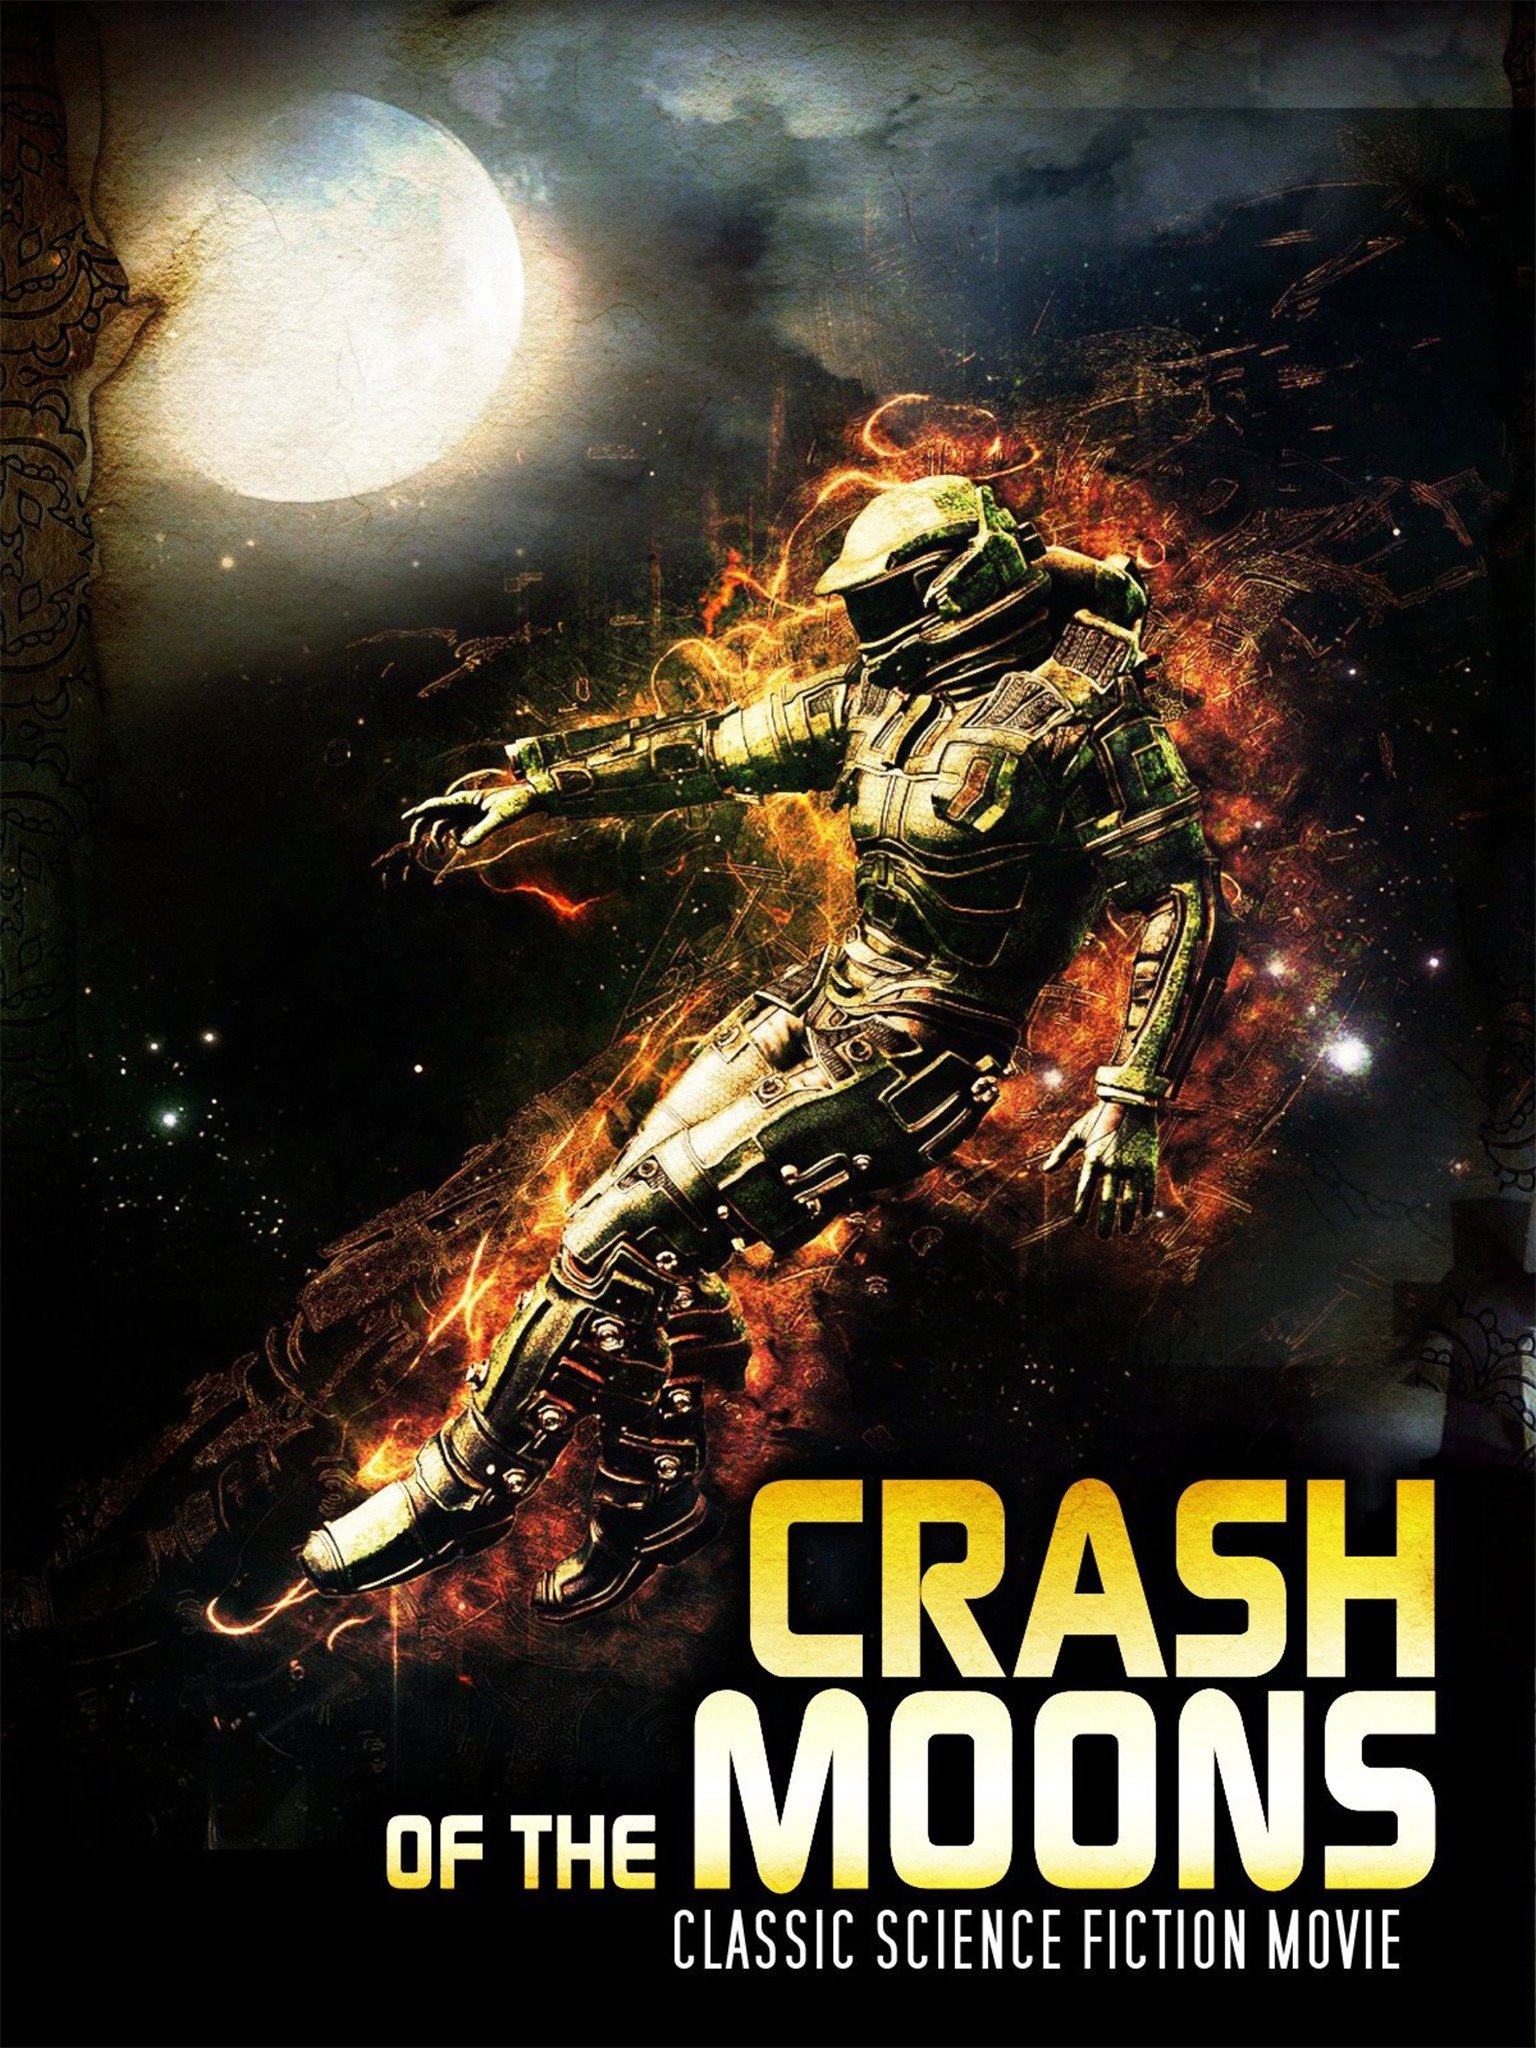 moon crash movie review